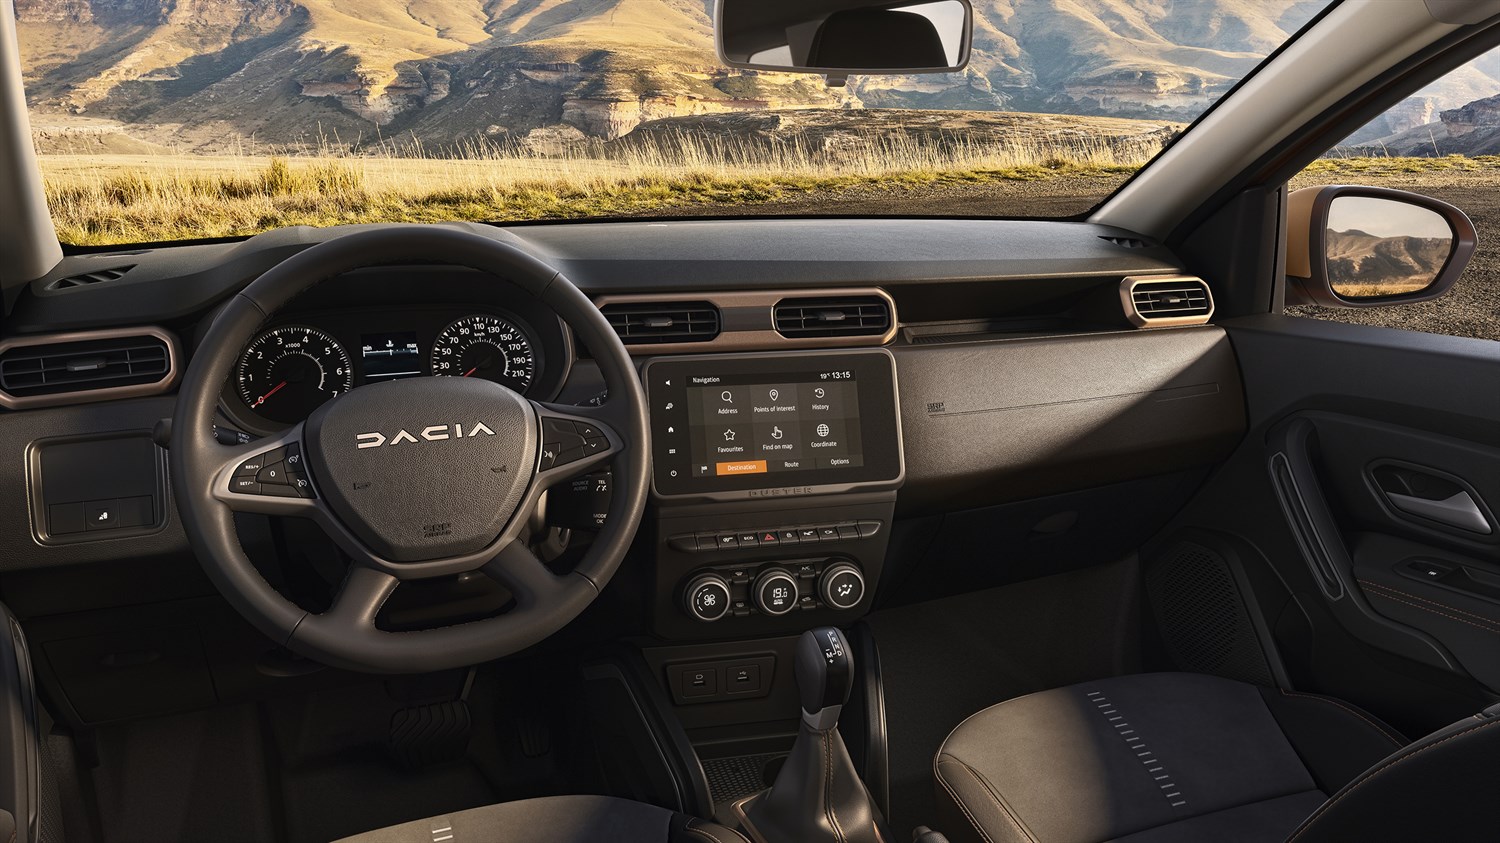 Dacia Duster Extreme - interior